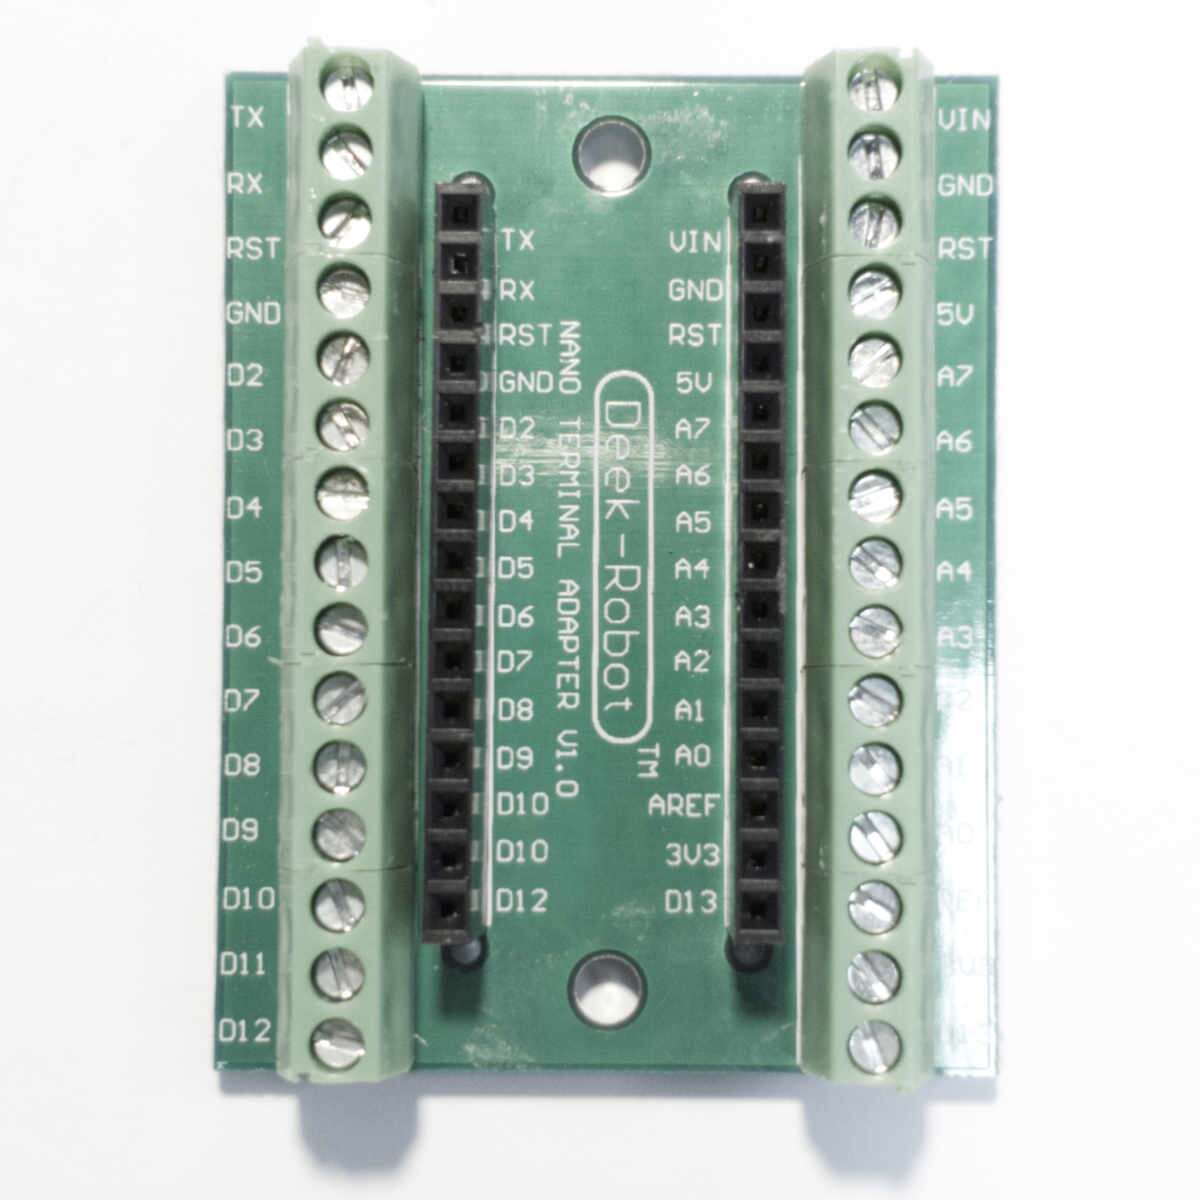 3 pcs Treedix Screw Terminal Adapter Shield Expansion Board for Arduino Nano V3.0